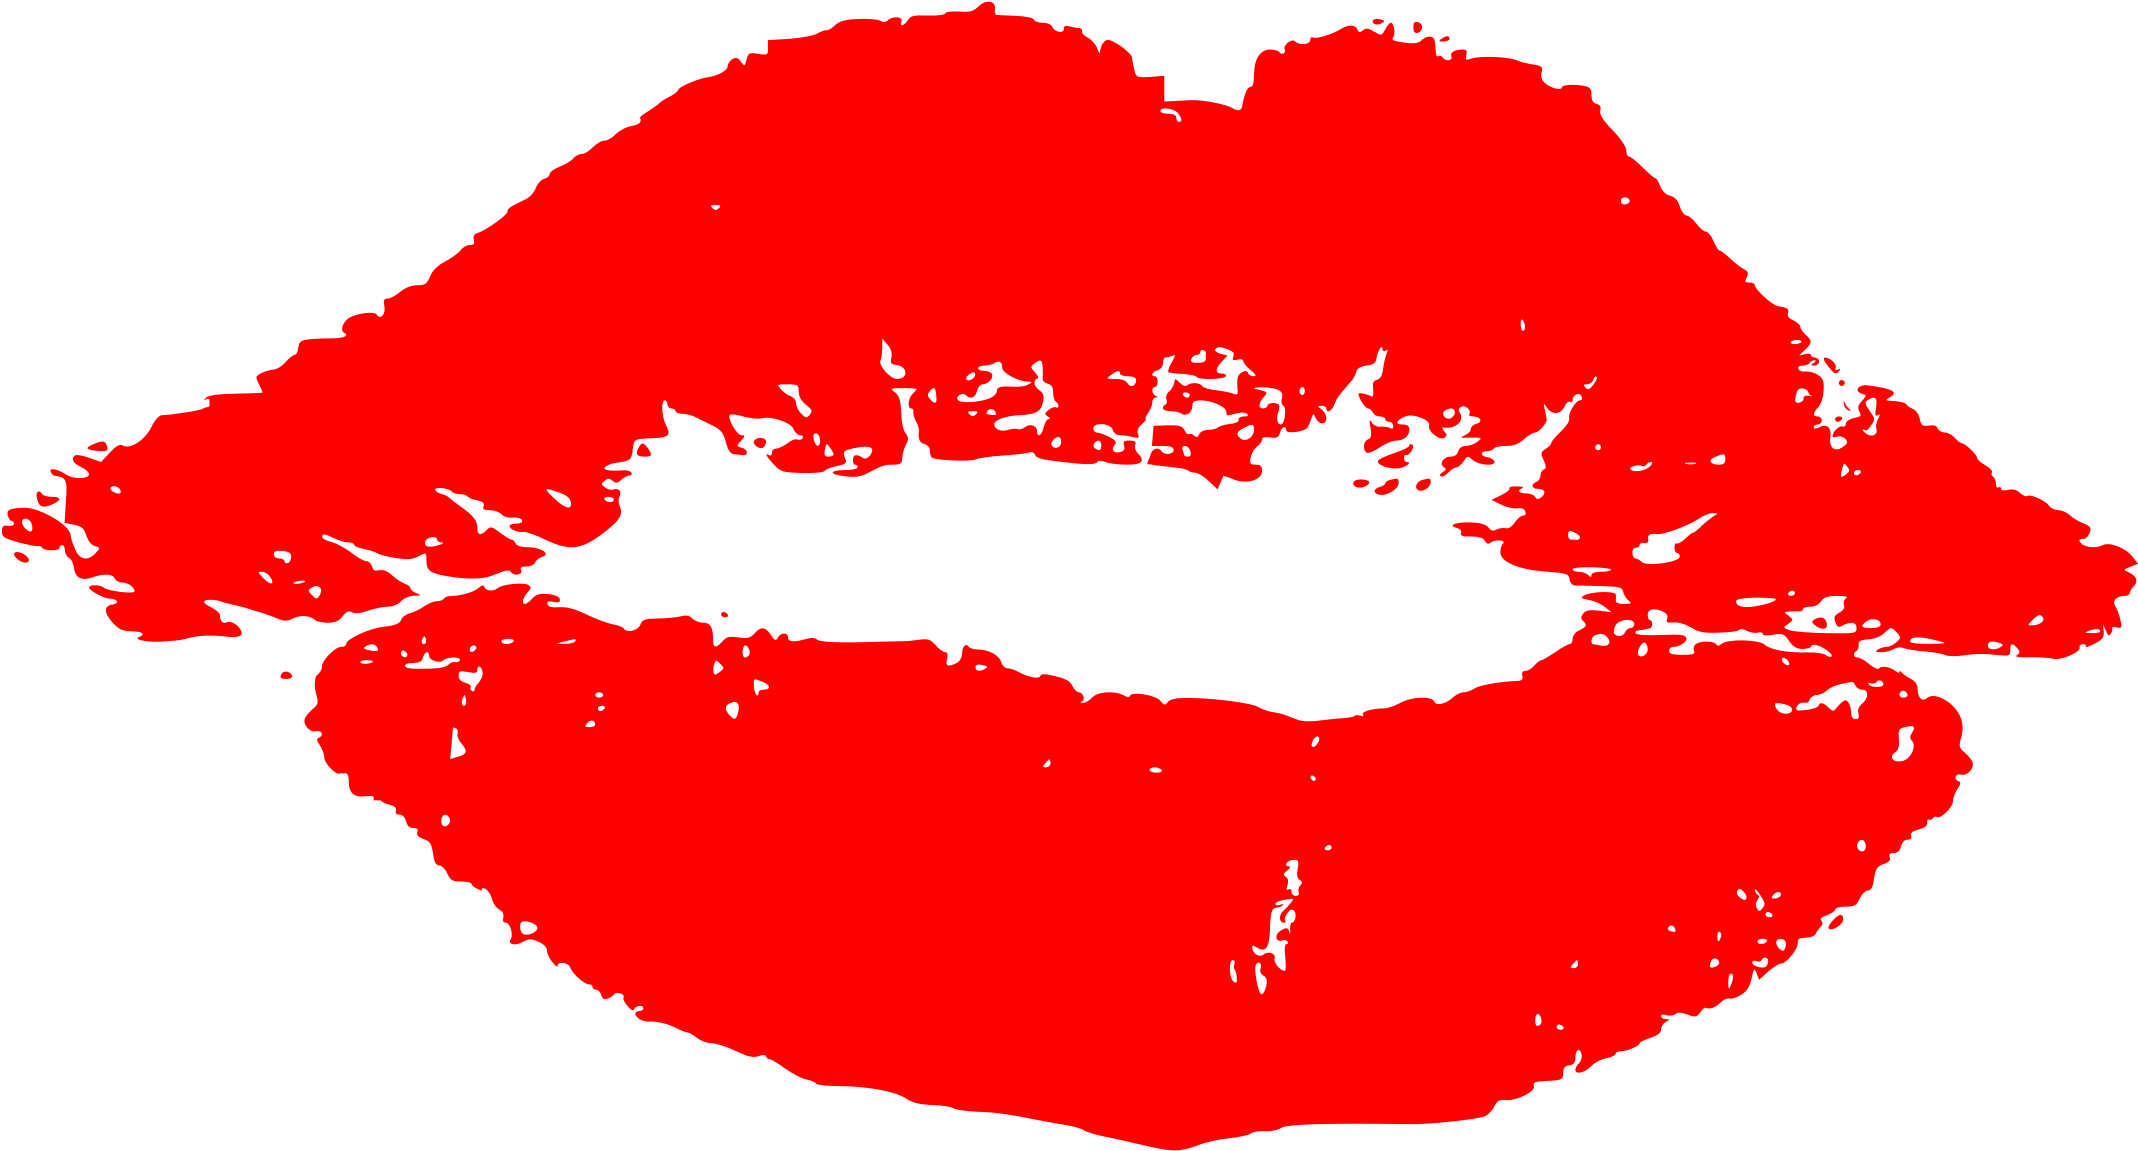 Red Lipstick Kiss Mark